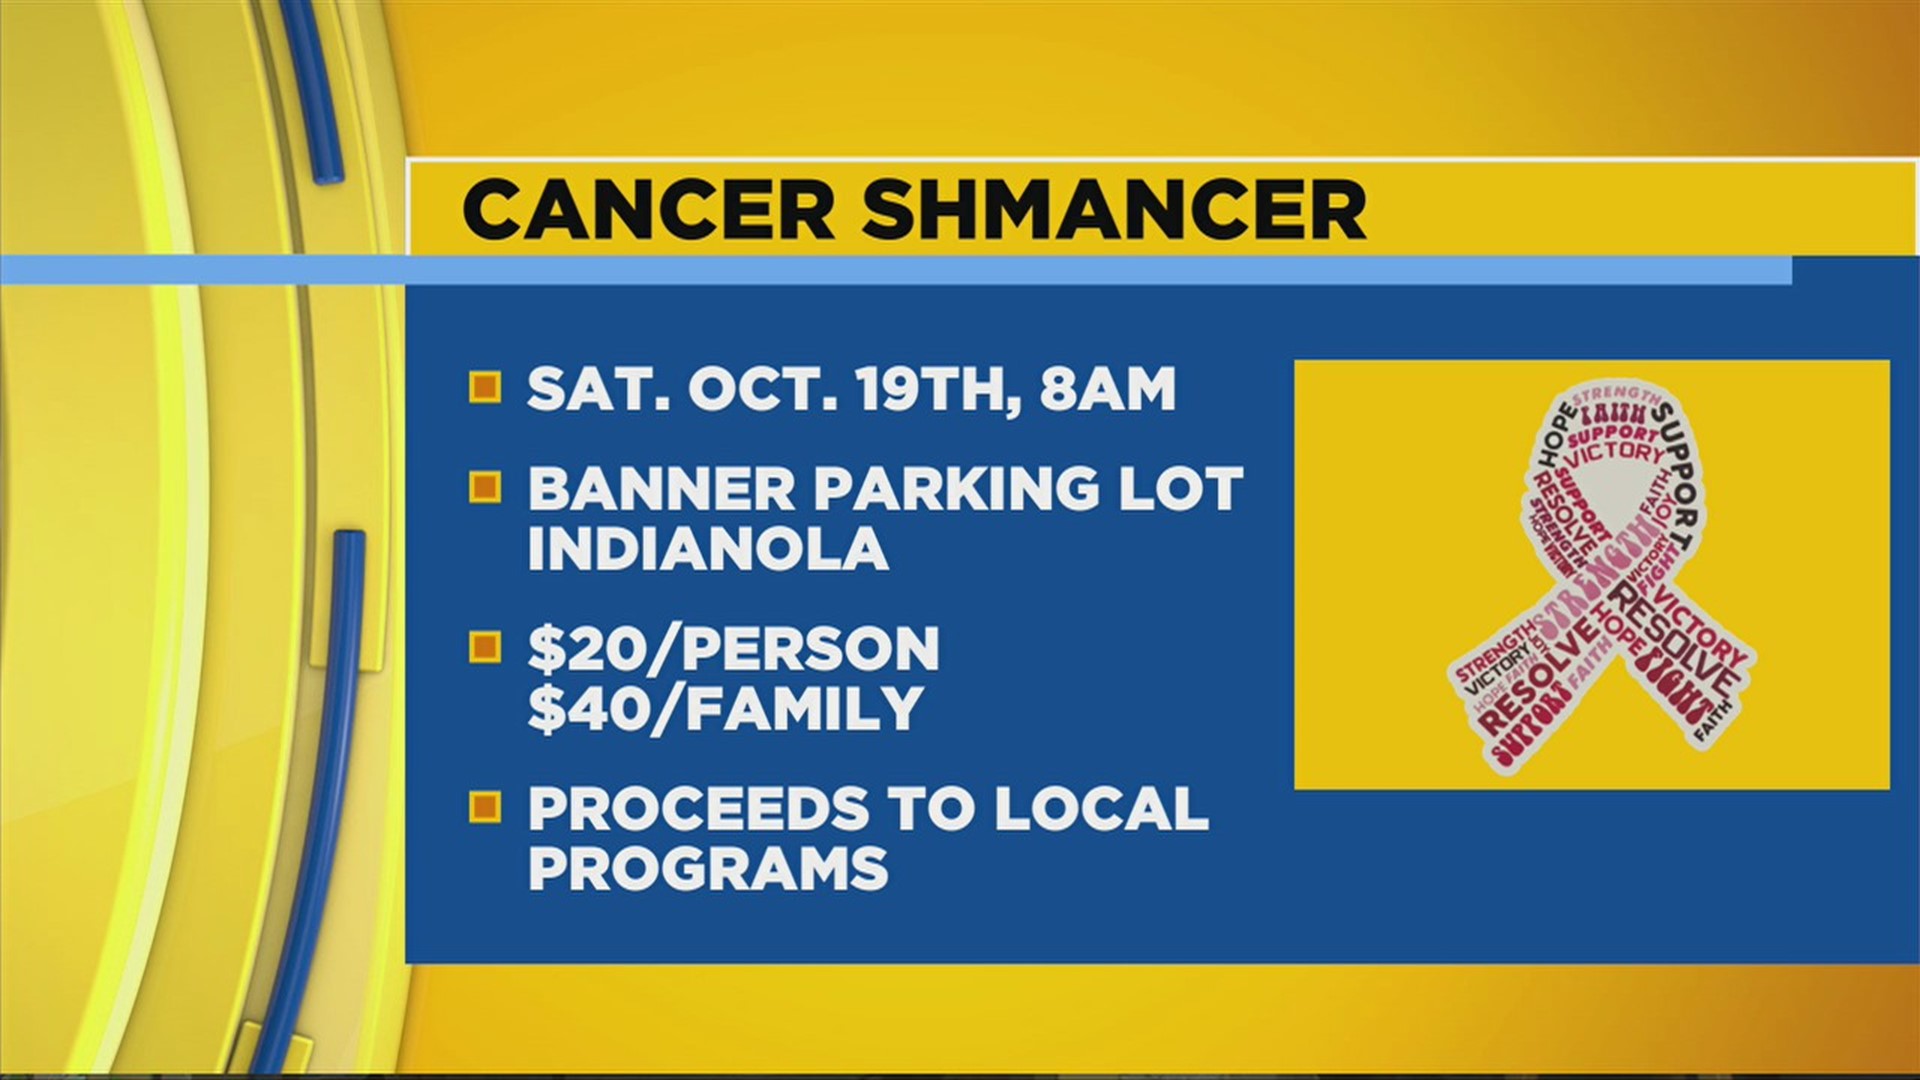 Cancer Shmancer - Breast Cancer Awareness Month